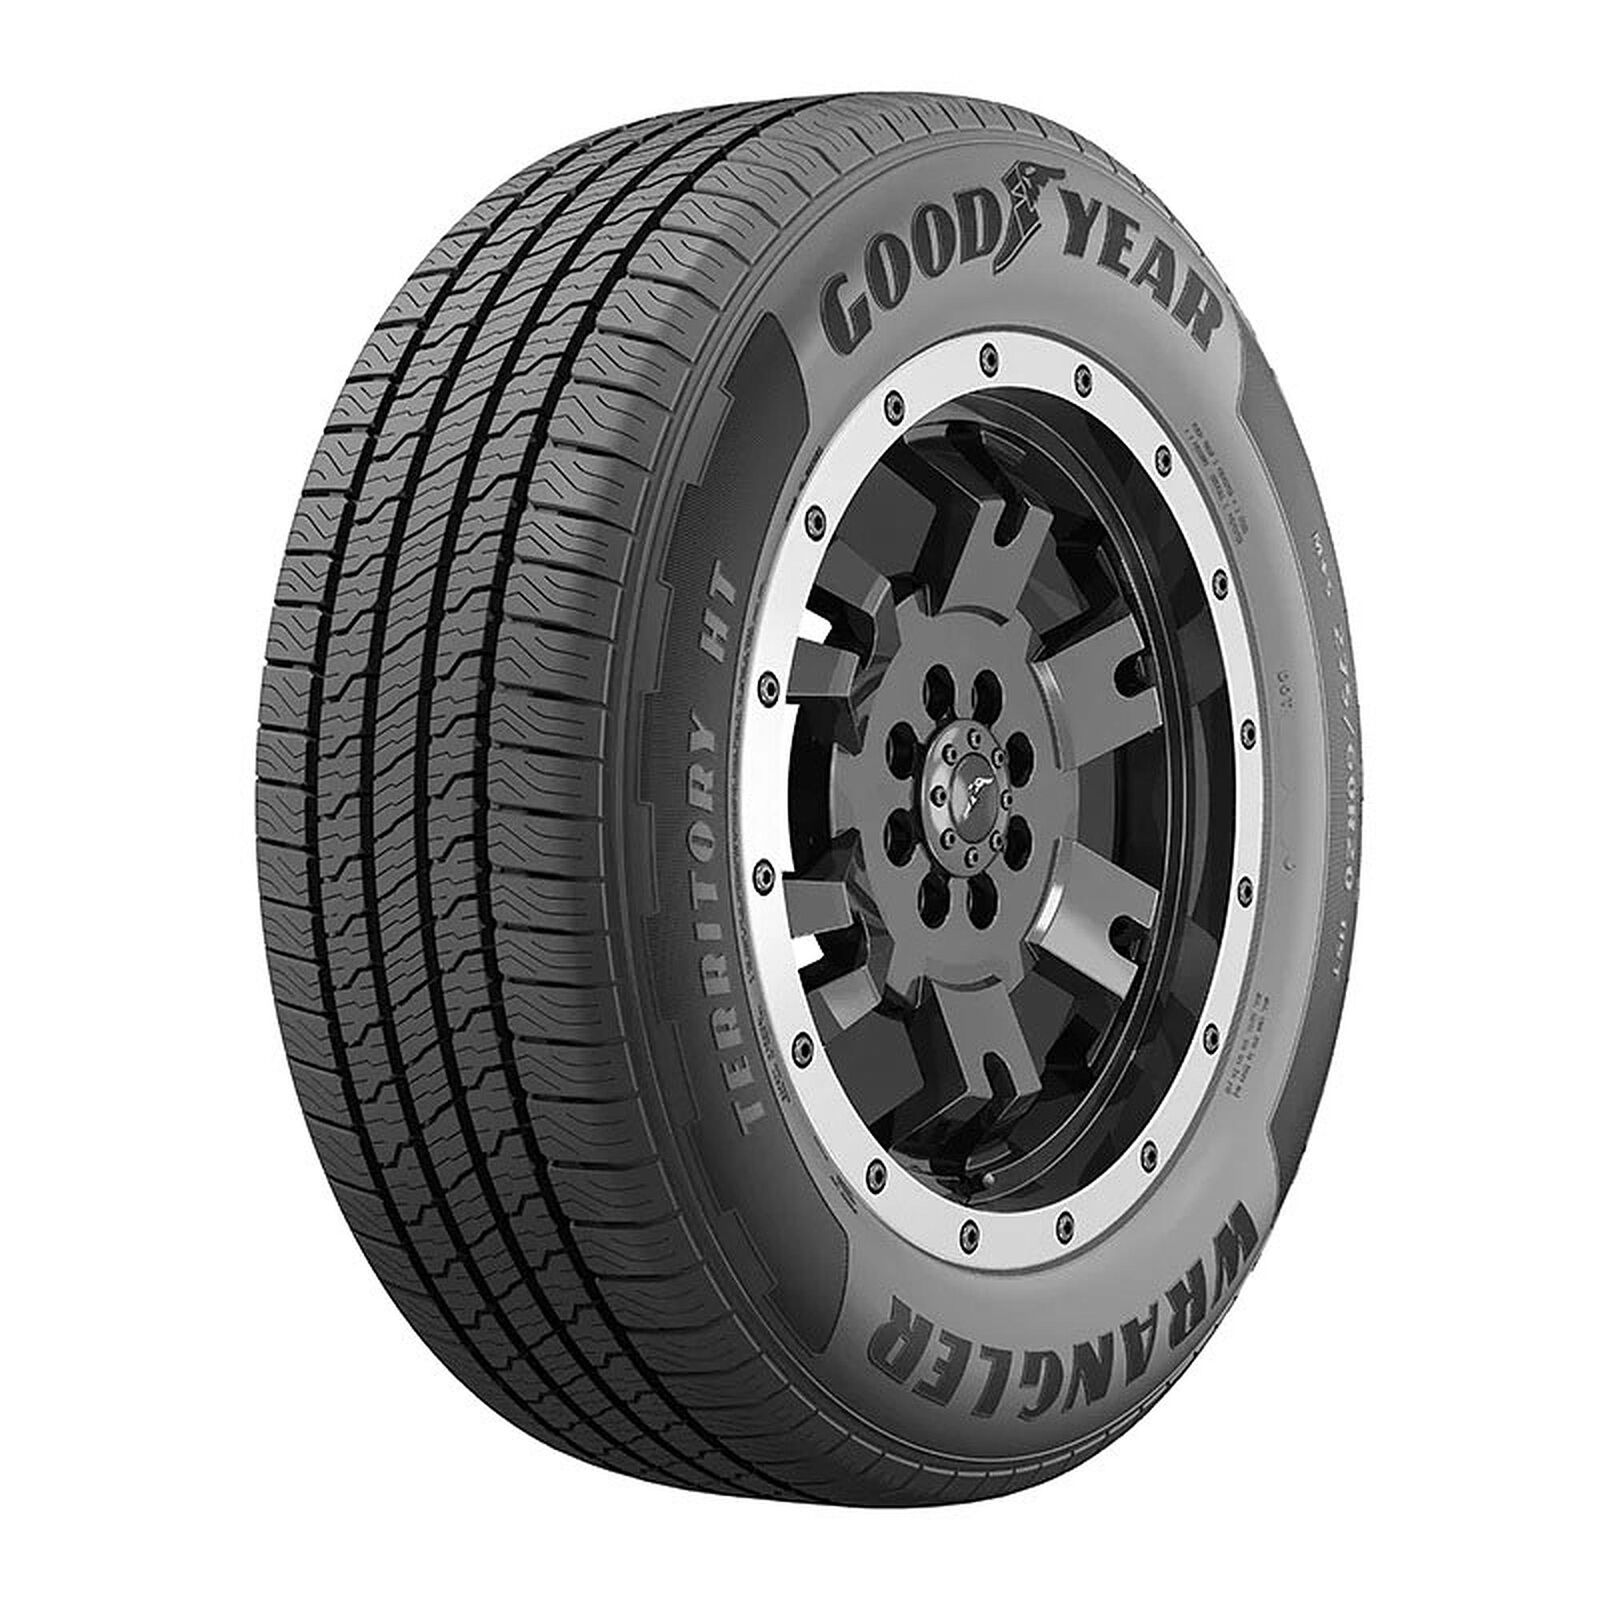 4 New Goodyear Wrangler Territory H/t  - P255x70r17 Tires 2557017 255 70 17